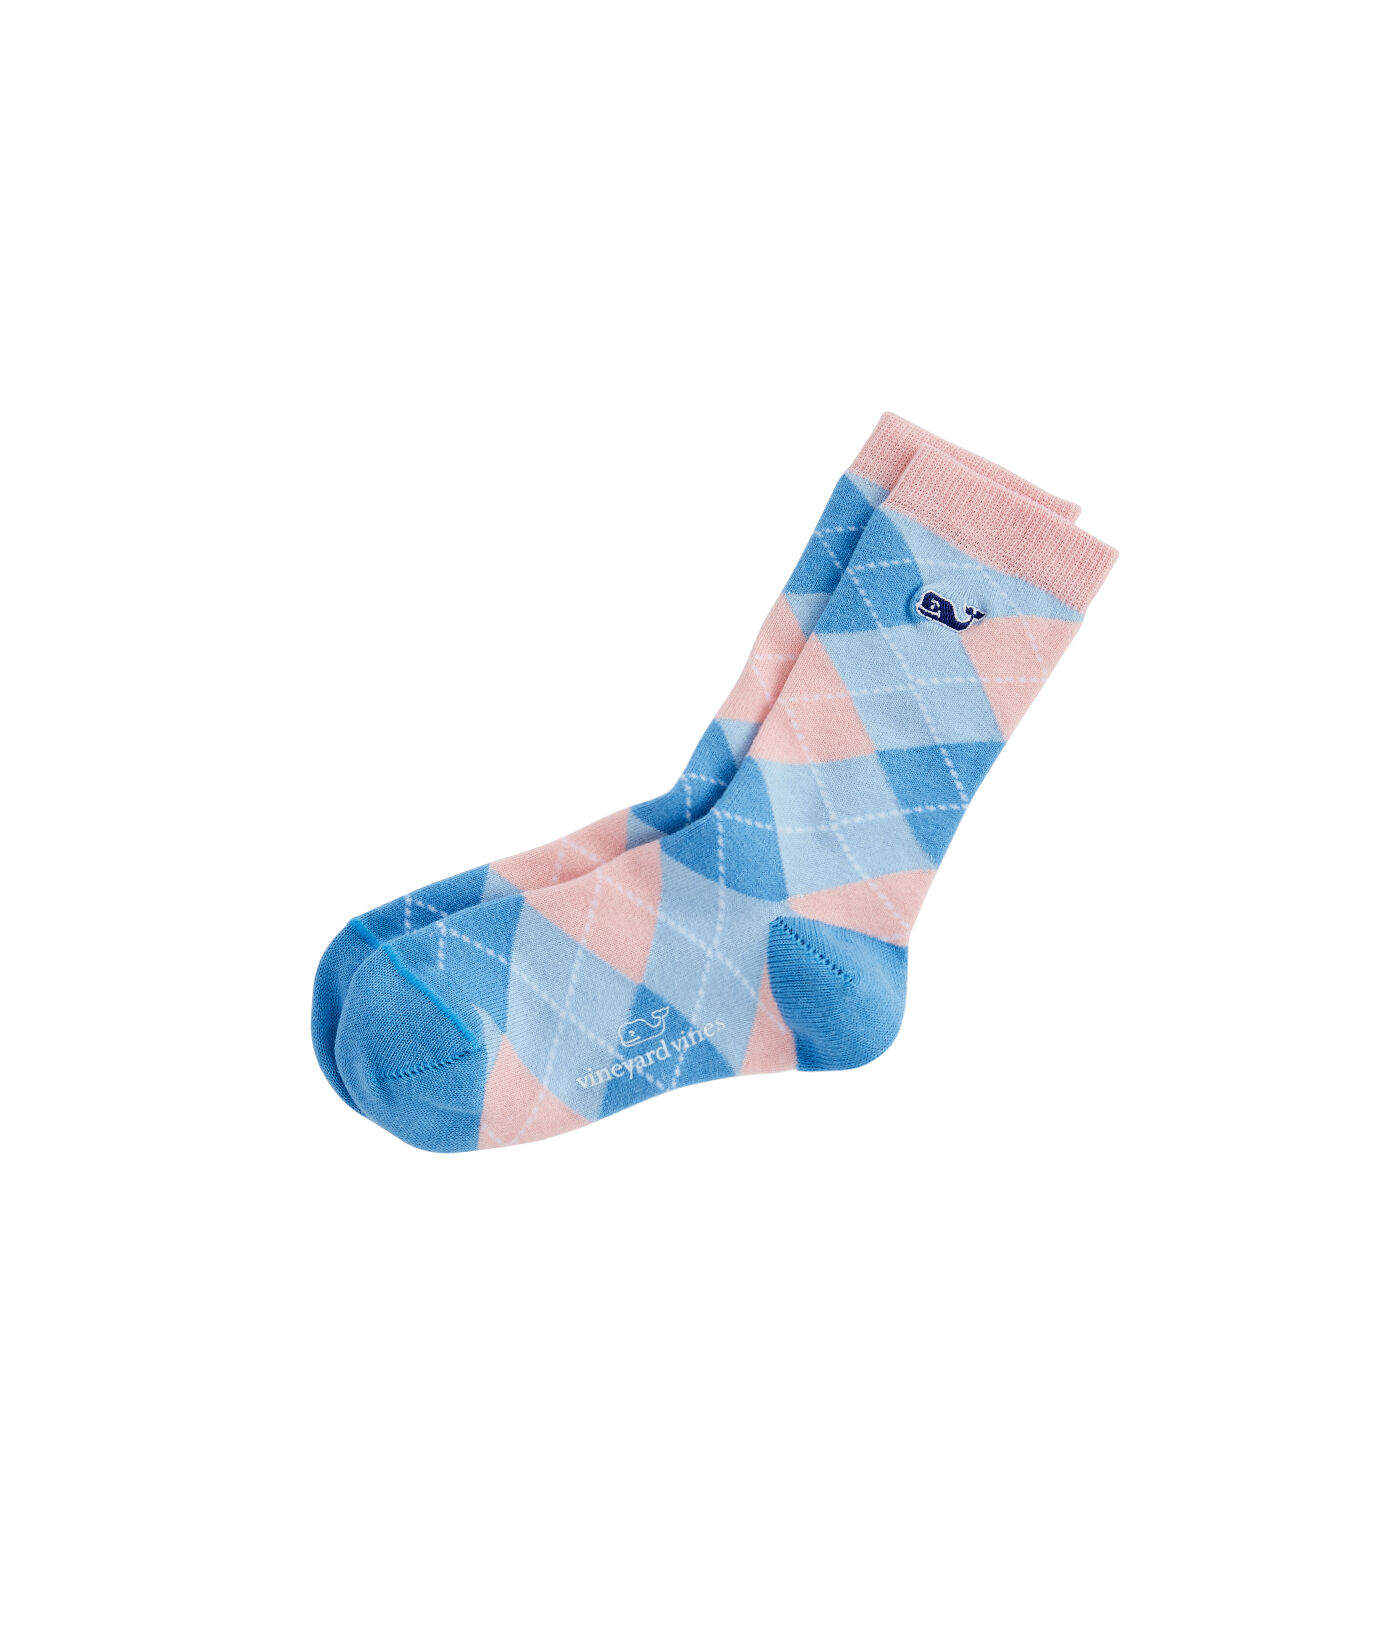 boys argyle socks